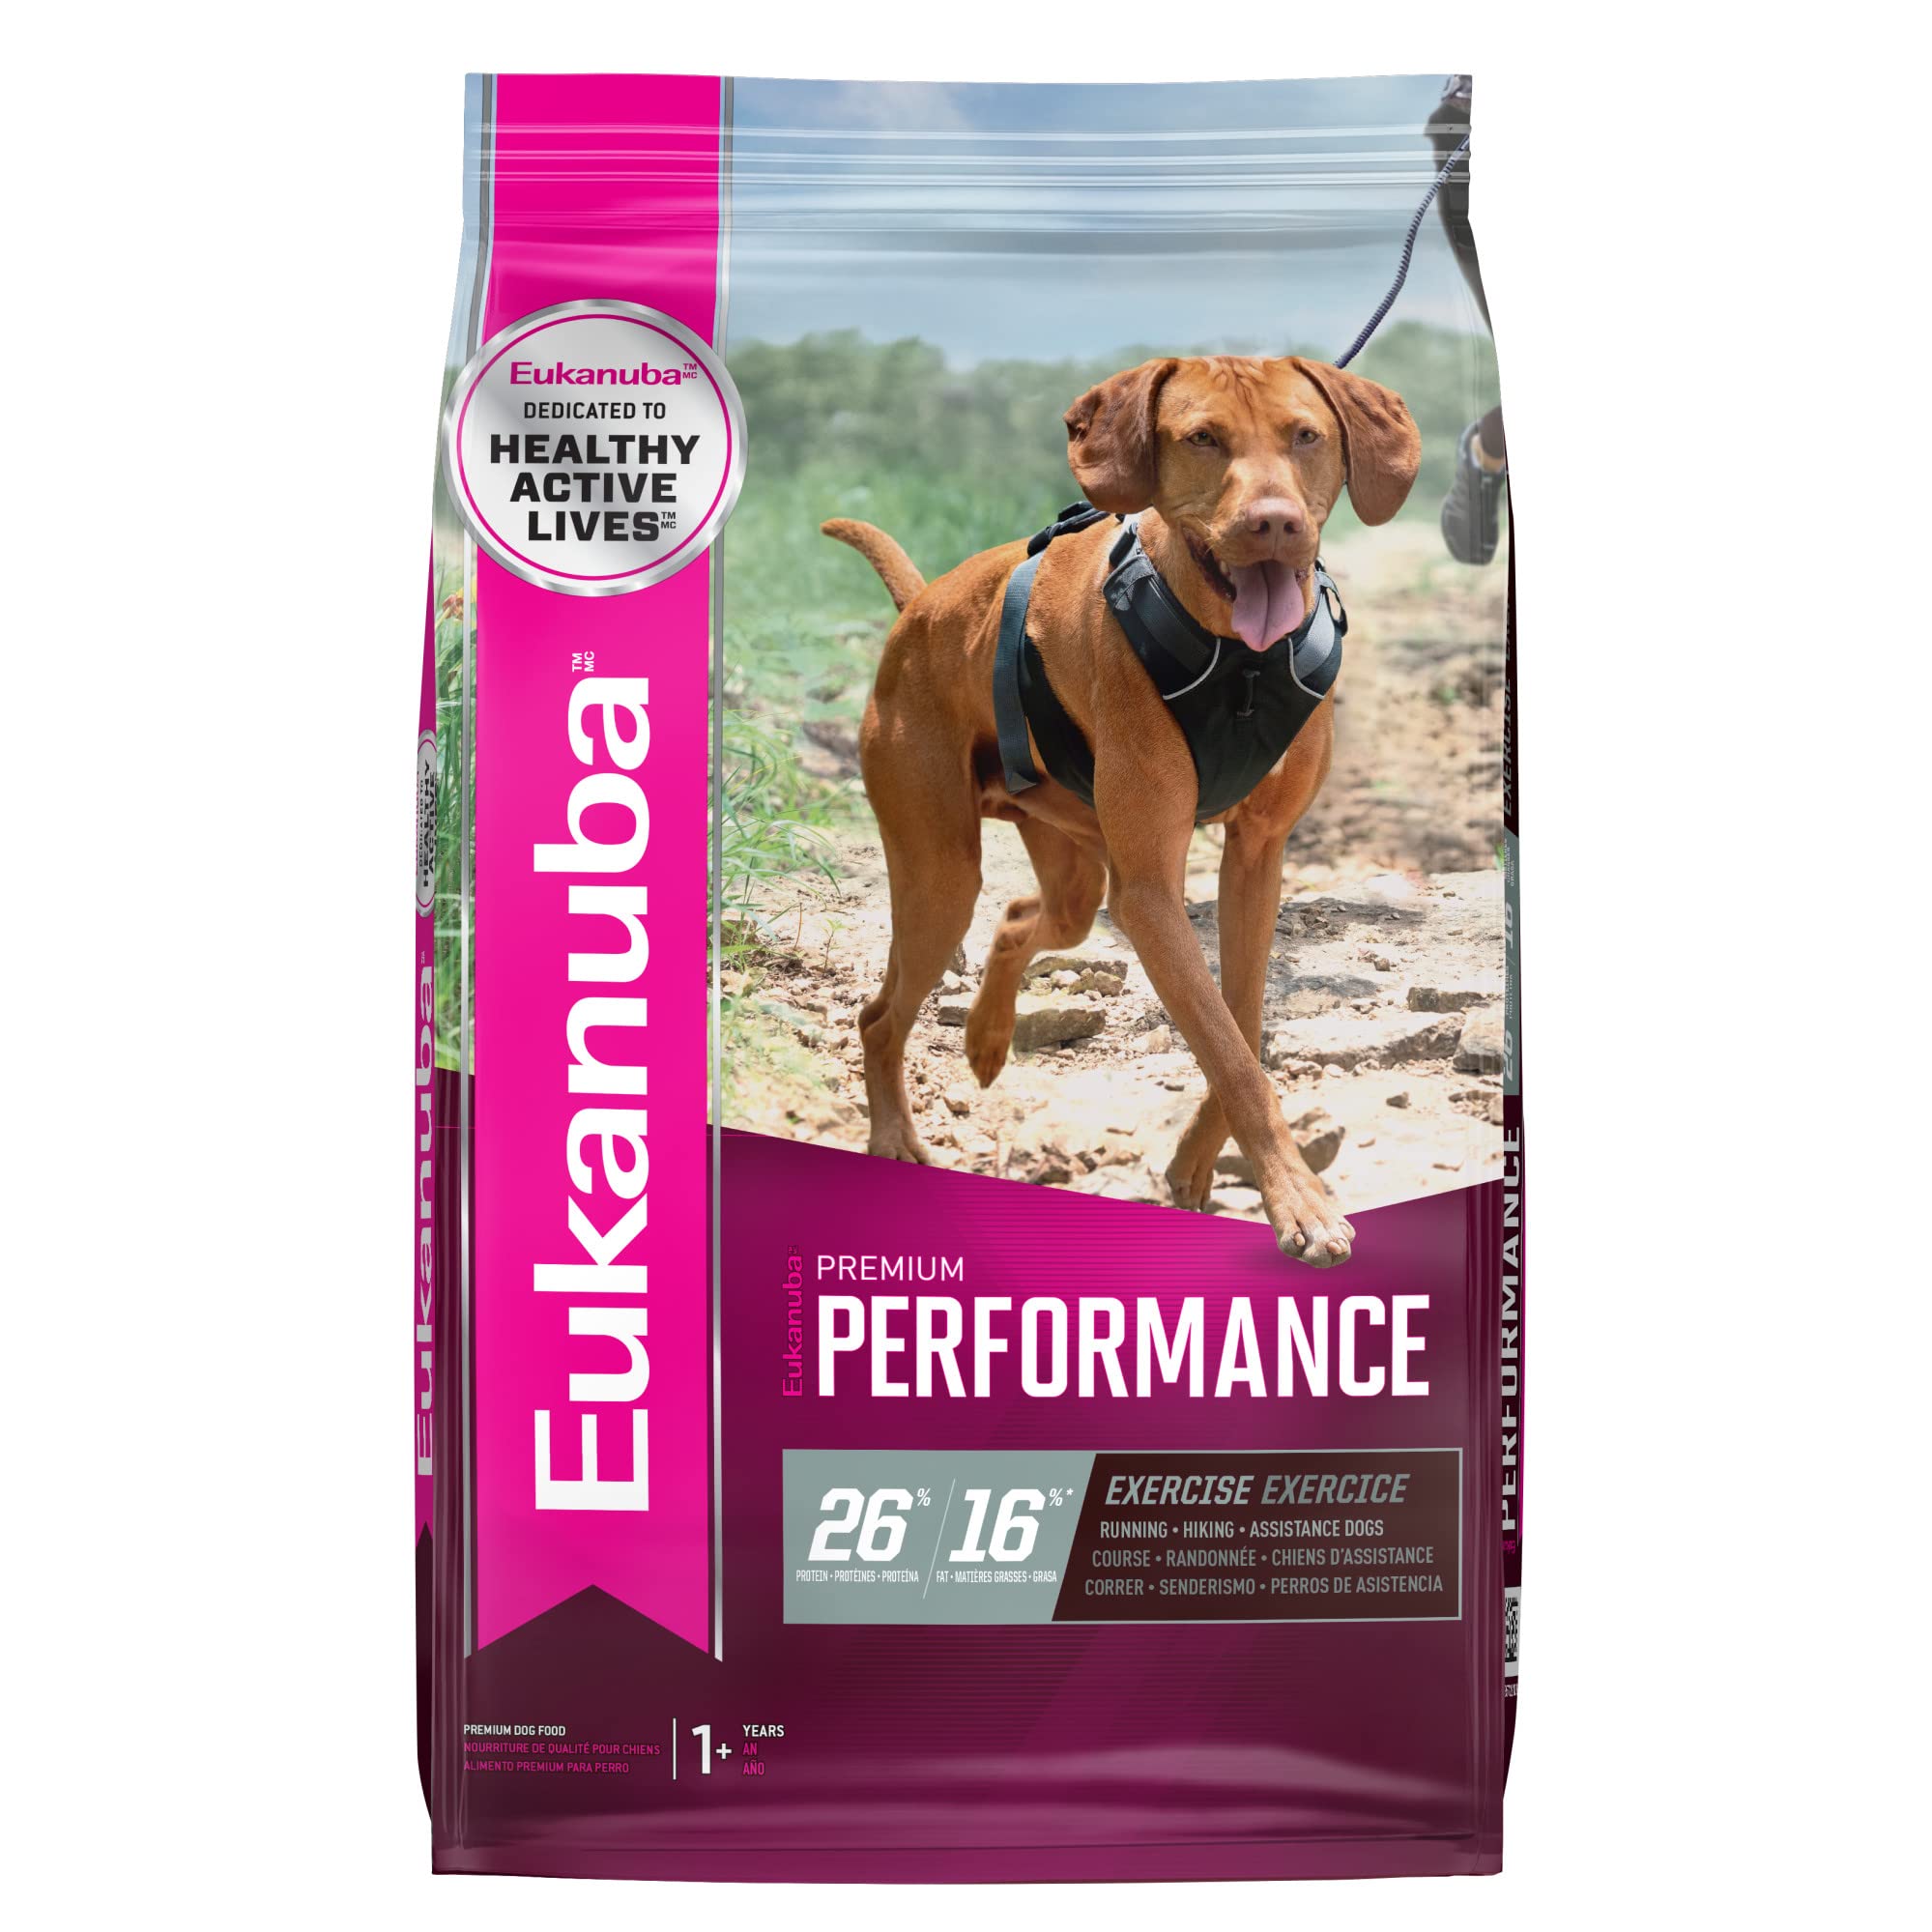 Eukanuba Premium Performance 26/16 Exercise Dry Dog Food - 14 Lbs  